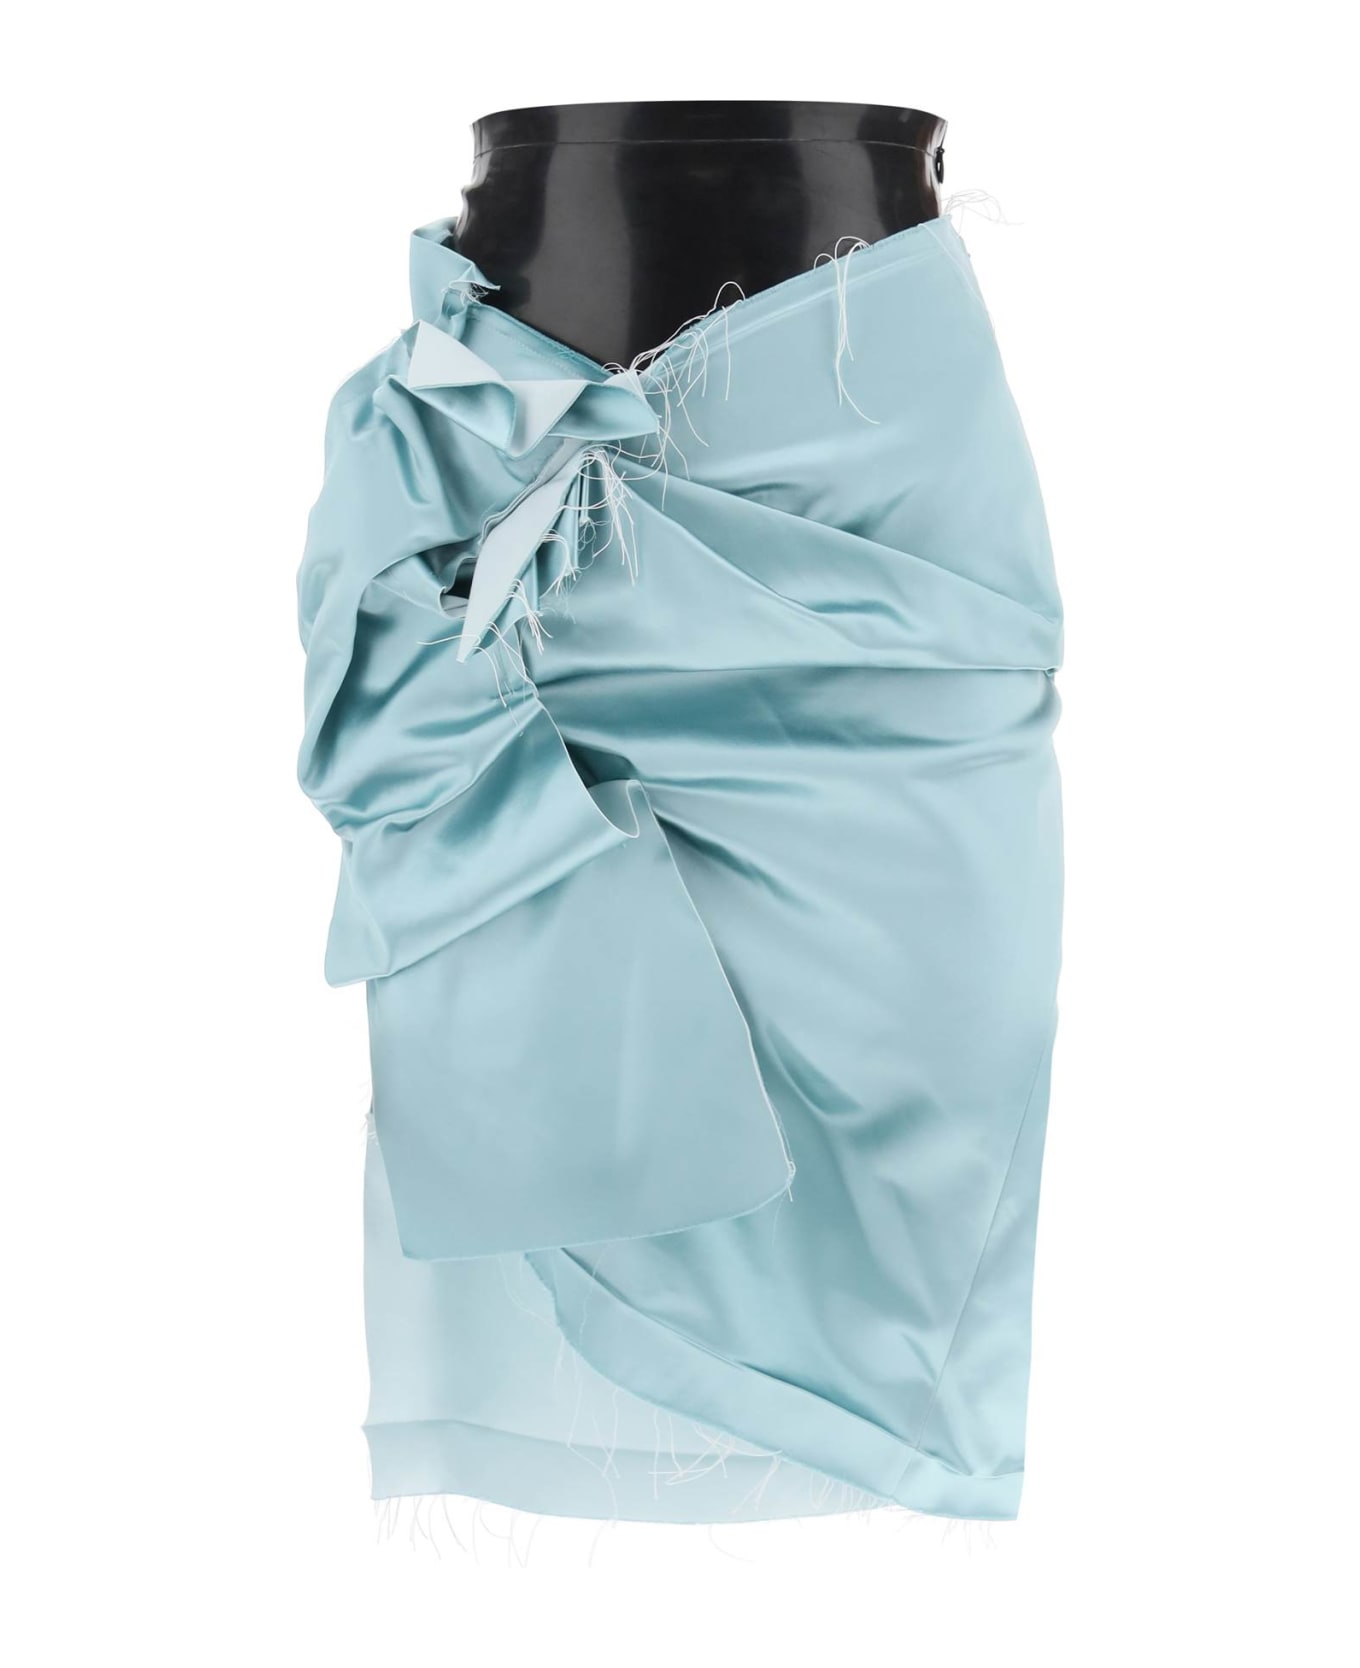 Maison Margiela Decortique Skirt With Built-in Briefs - TEAL (Light blue)